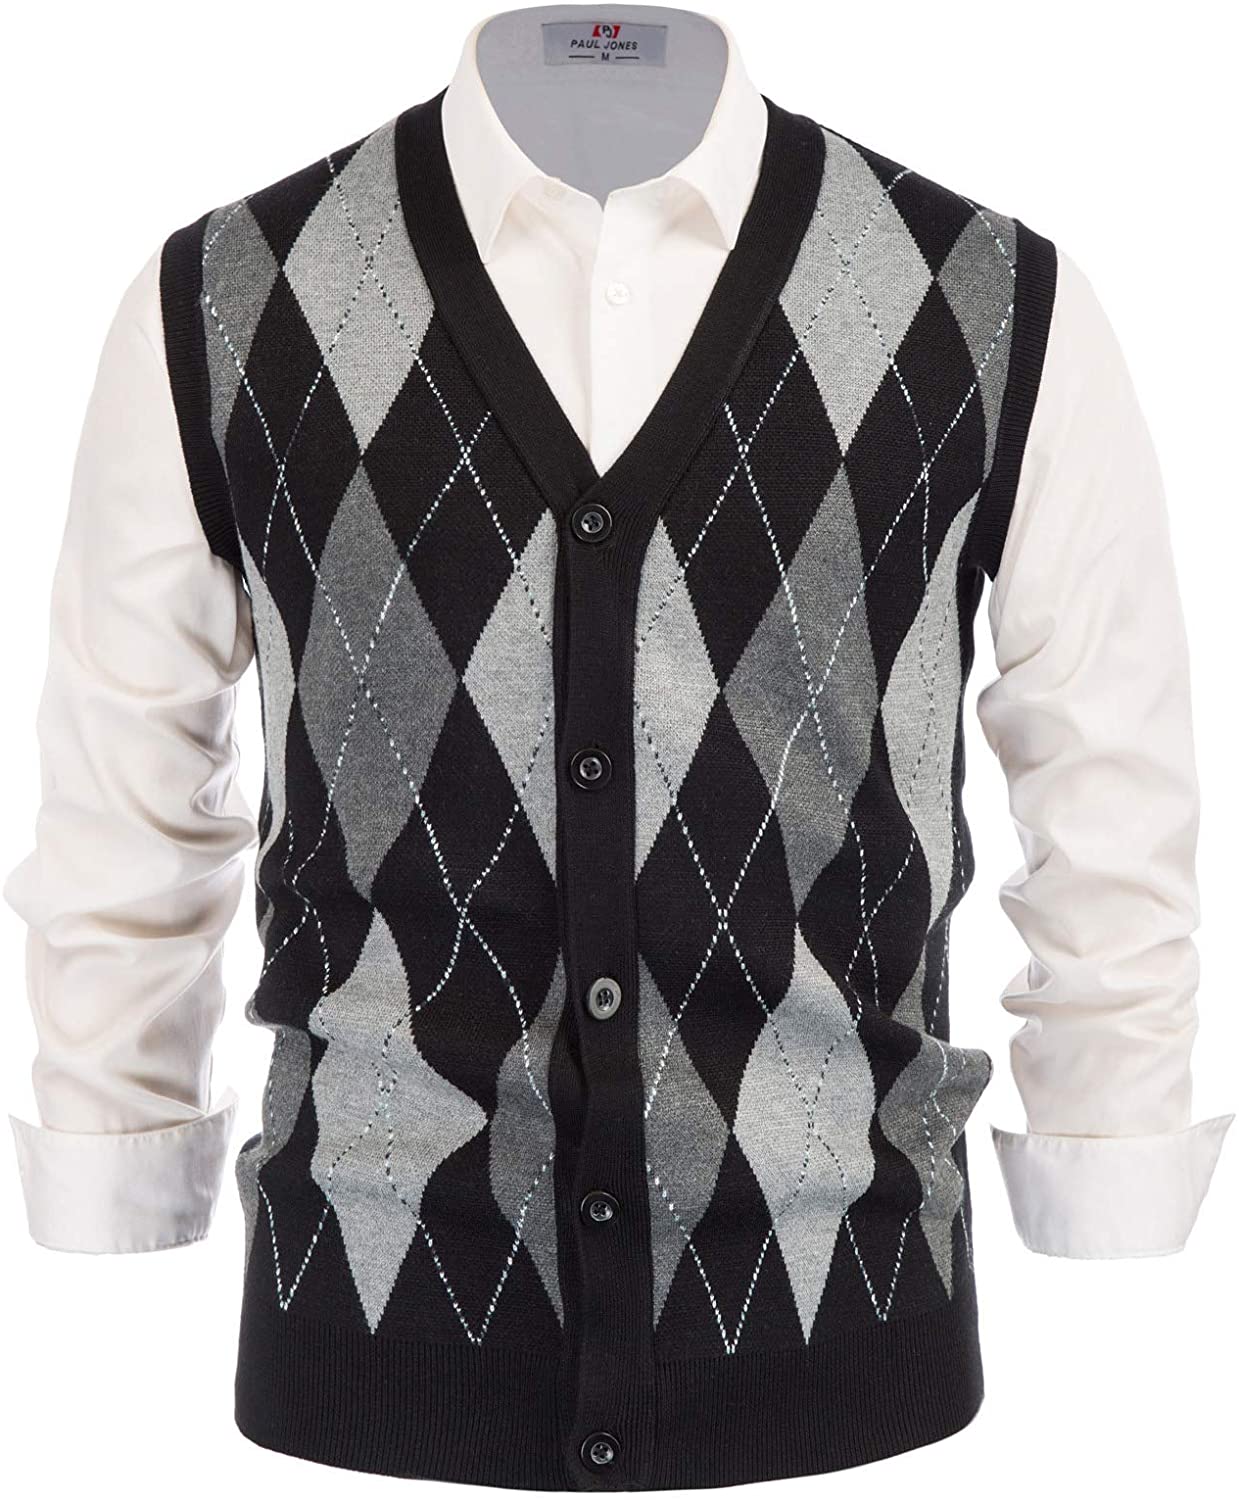 PJ PAUL JONES Men's Sweater Vest Cardigan Button Front Knitwear Contrast  Color A